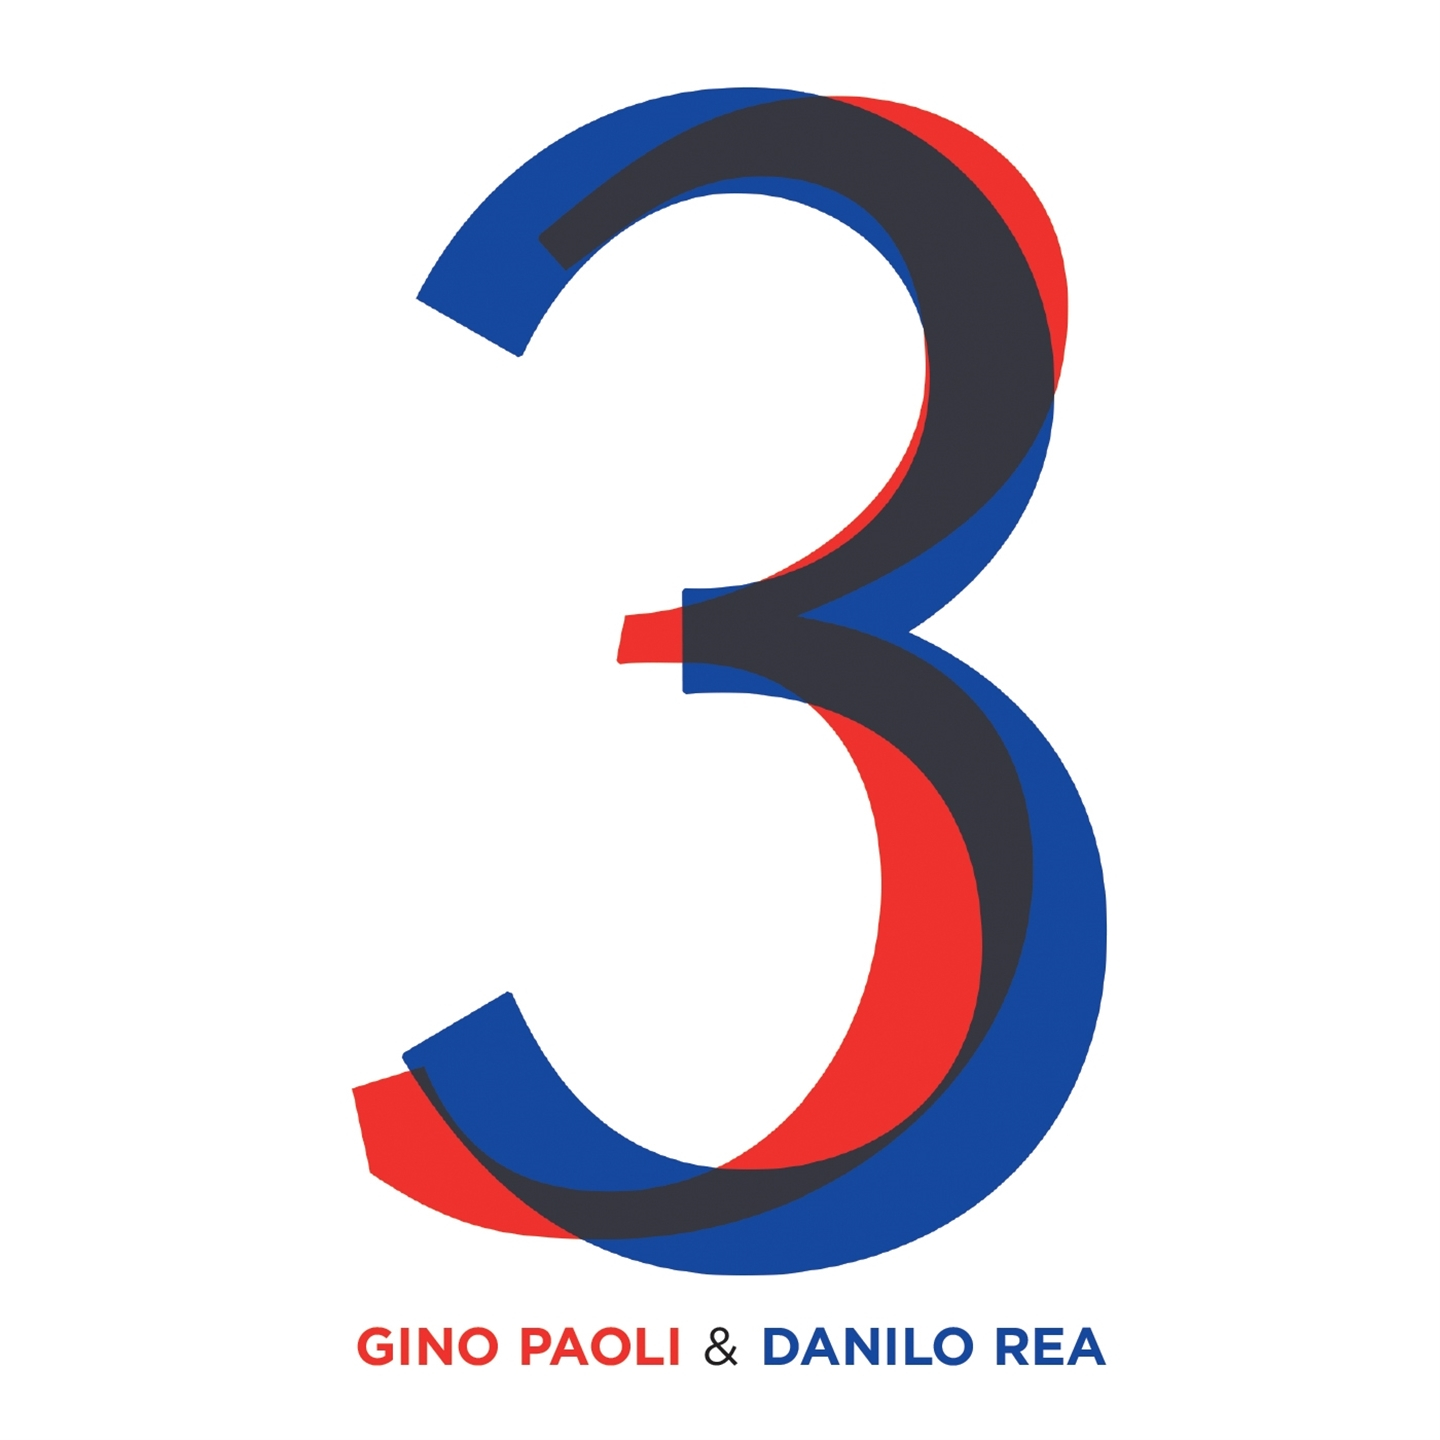 Gino Paoli, Danilo Rea - 3 - Afbeelding 1 van 1